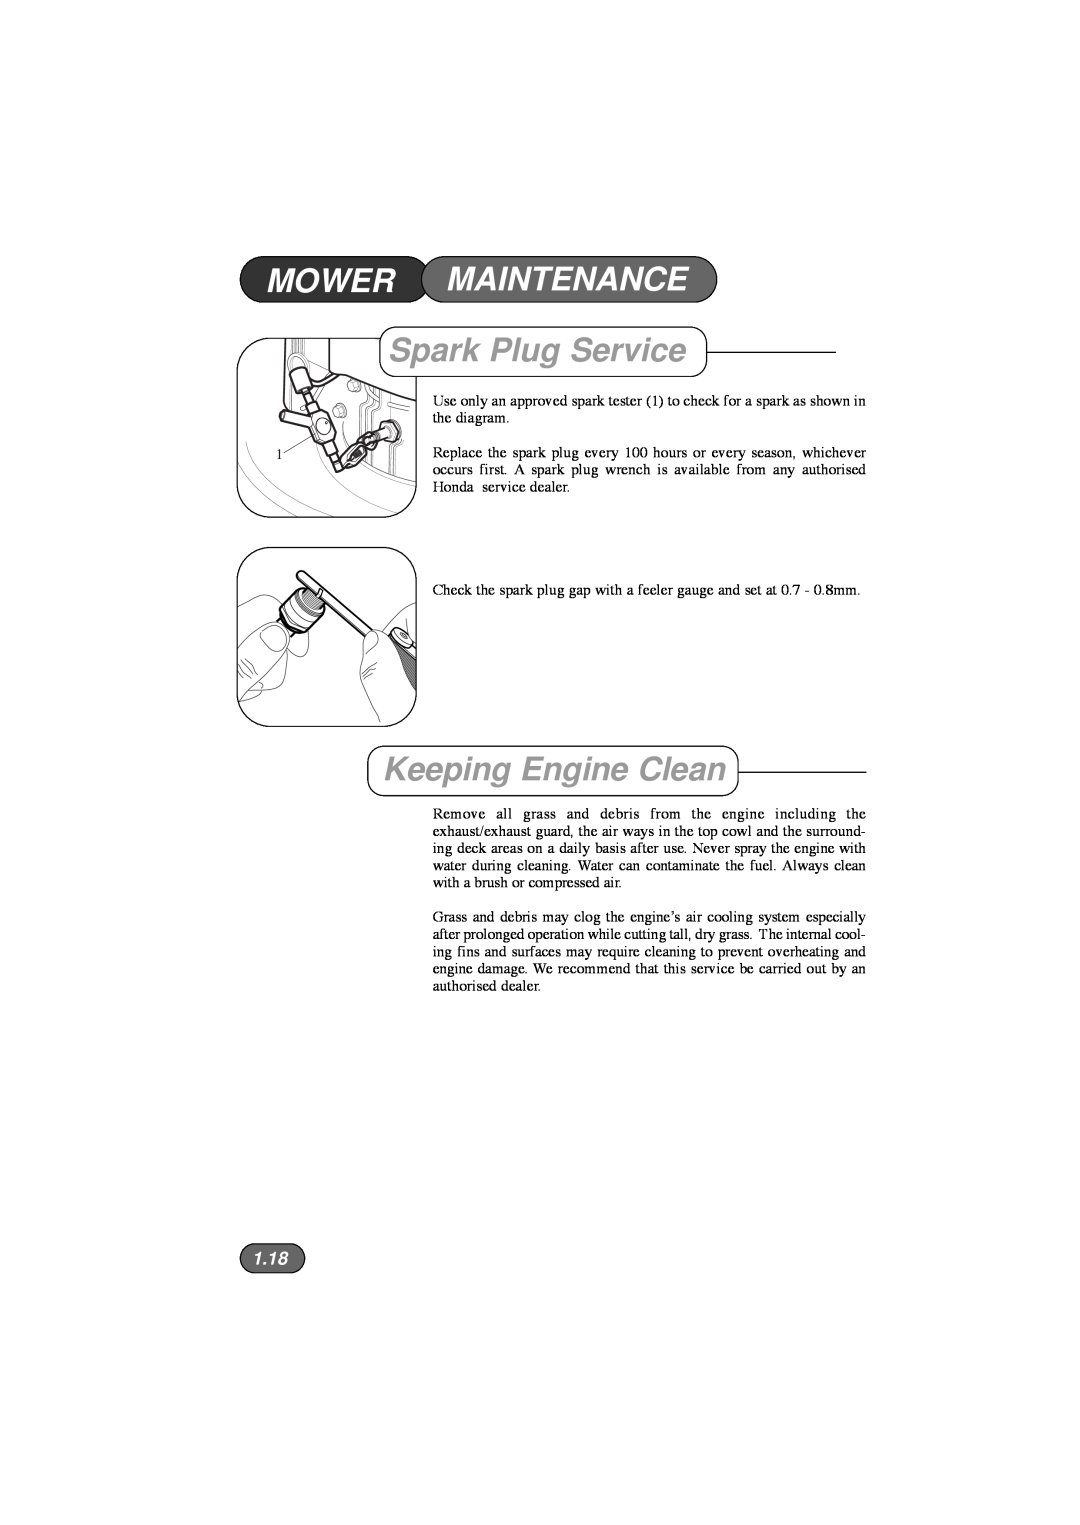 Hayter Mowers 450, 453, 446 Hovertrim manual Mower, Maintenance, Spark Plug Service, Keeping Engine Clean, 1.18 